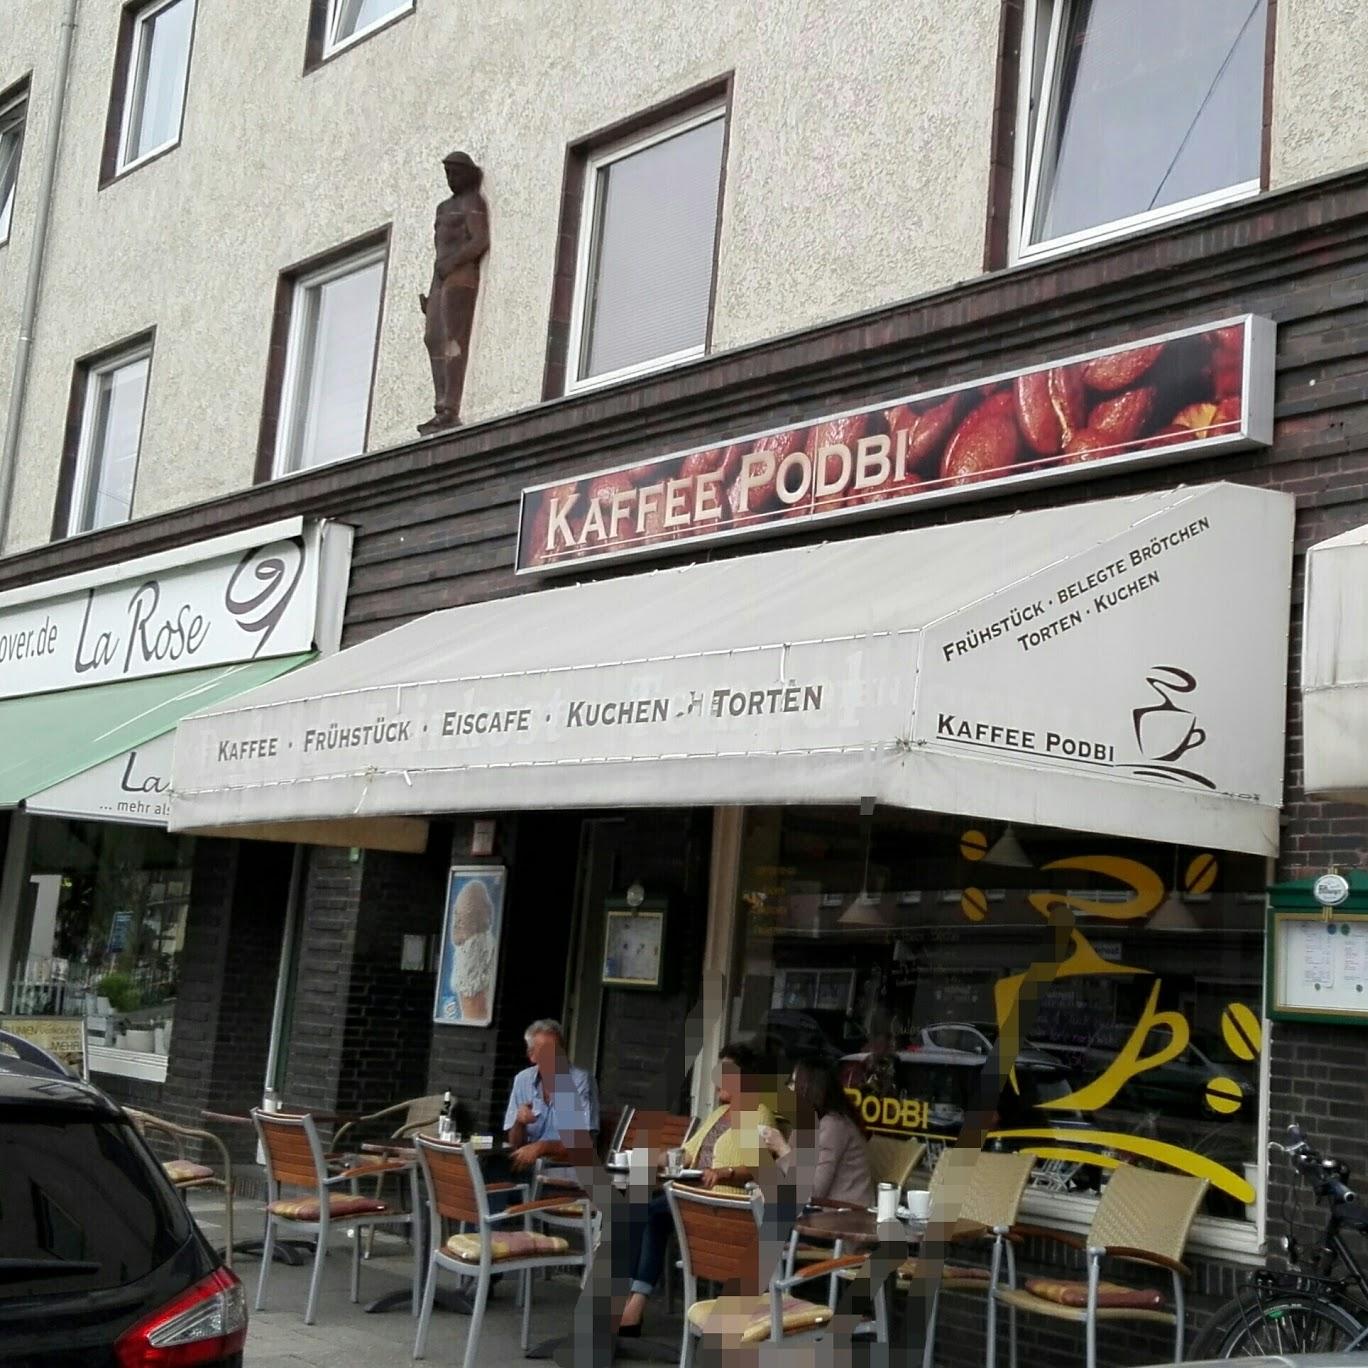 Restaurant "Kaffee Podbi" in Hannover